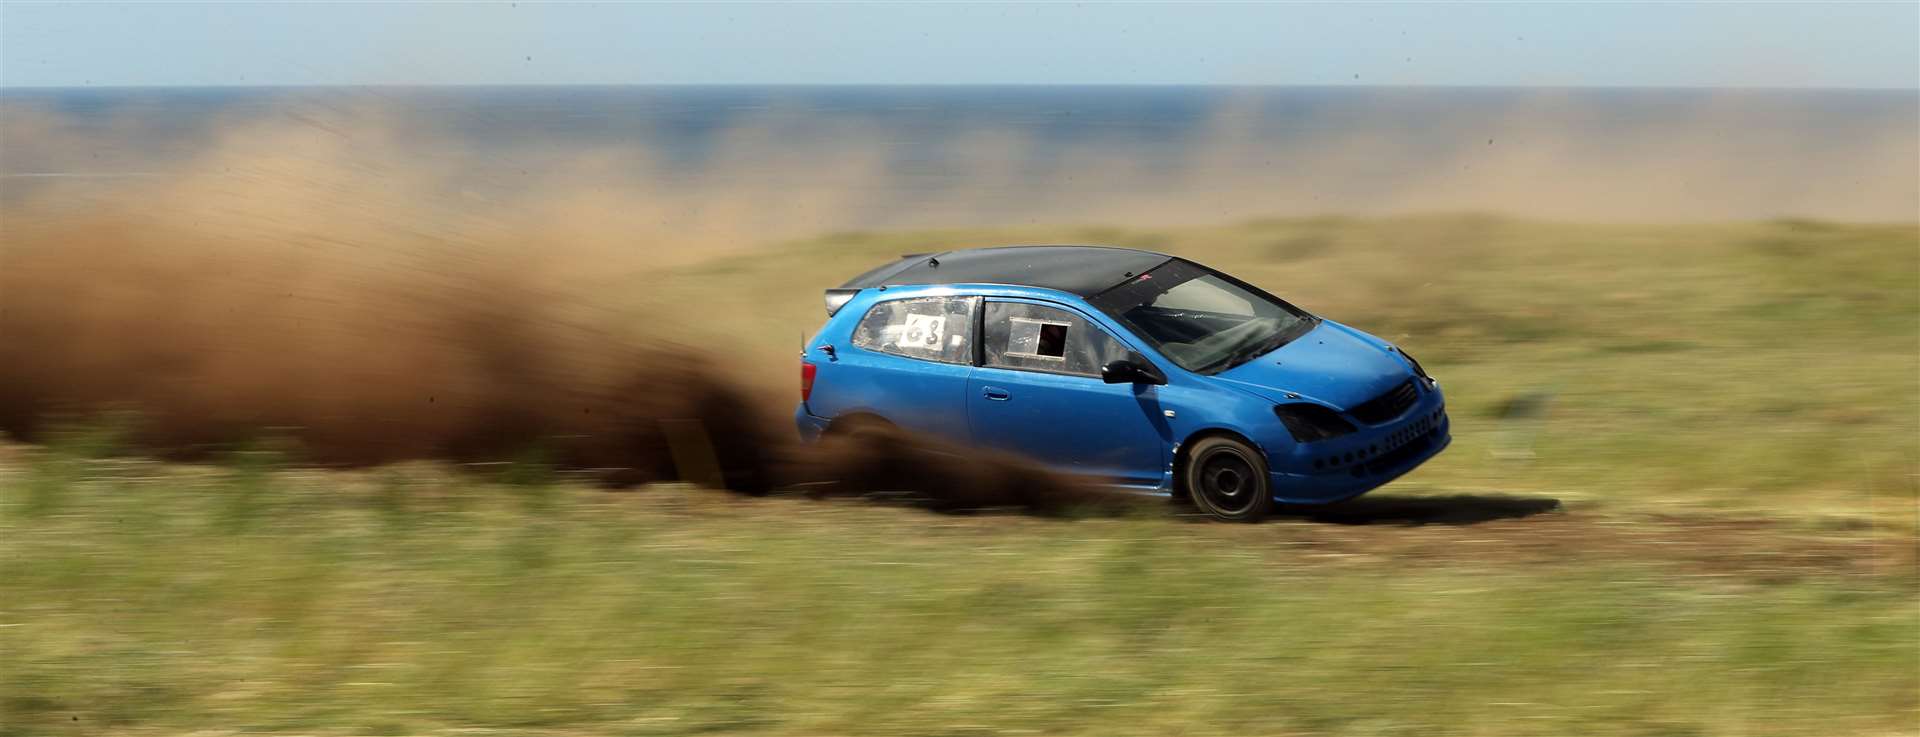 Olly Scott (Honda Civic Type R) putting on a burst of speed. Picture: James Gunn